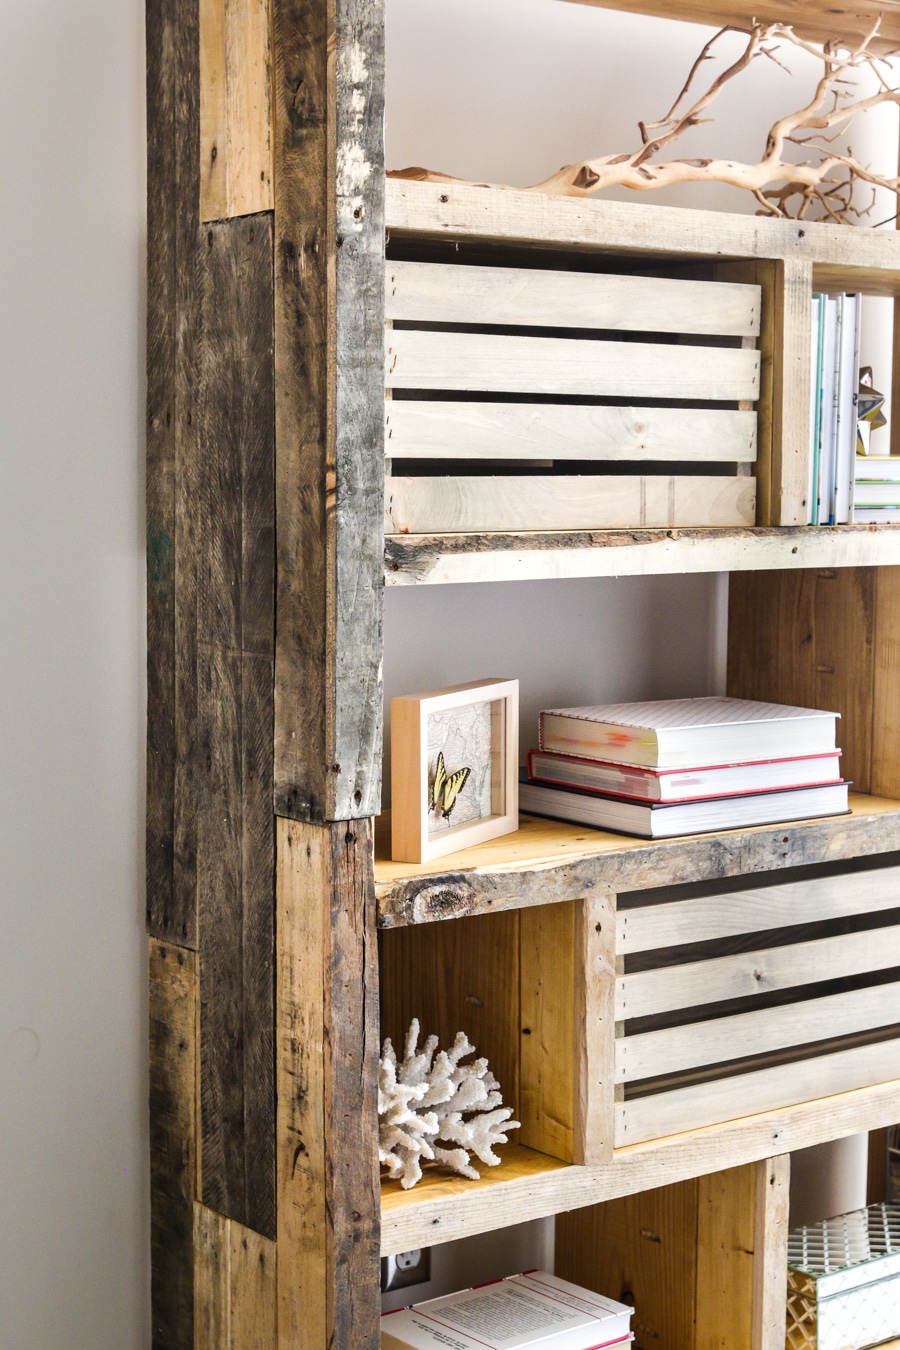 How to build a pallet bookshelf